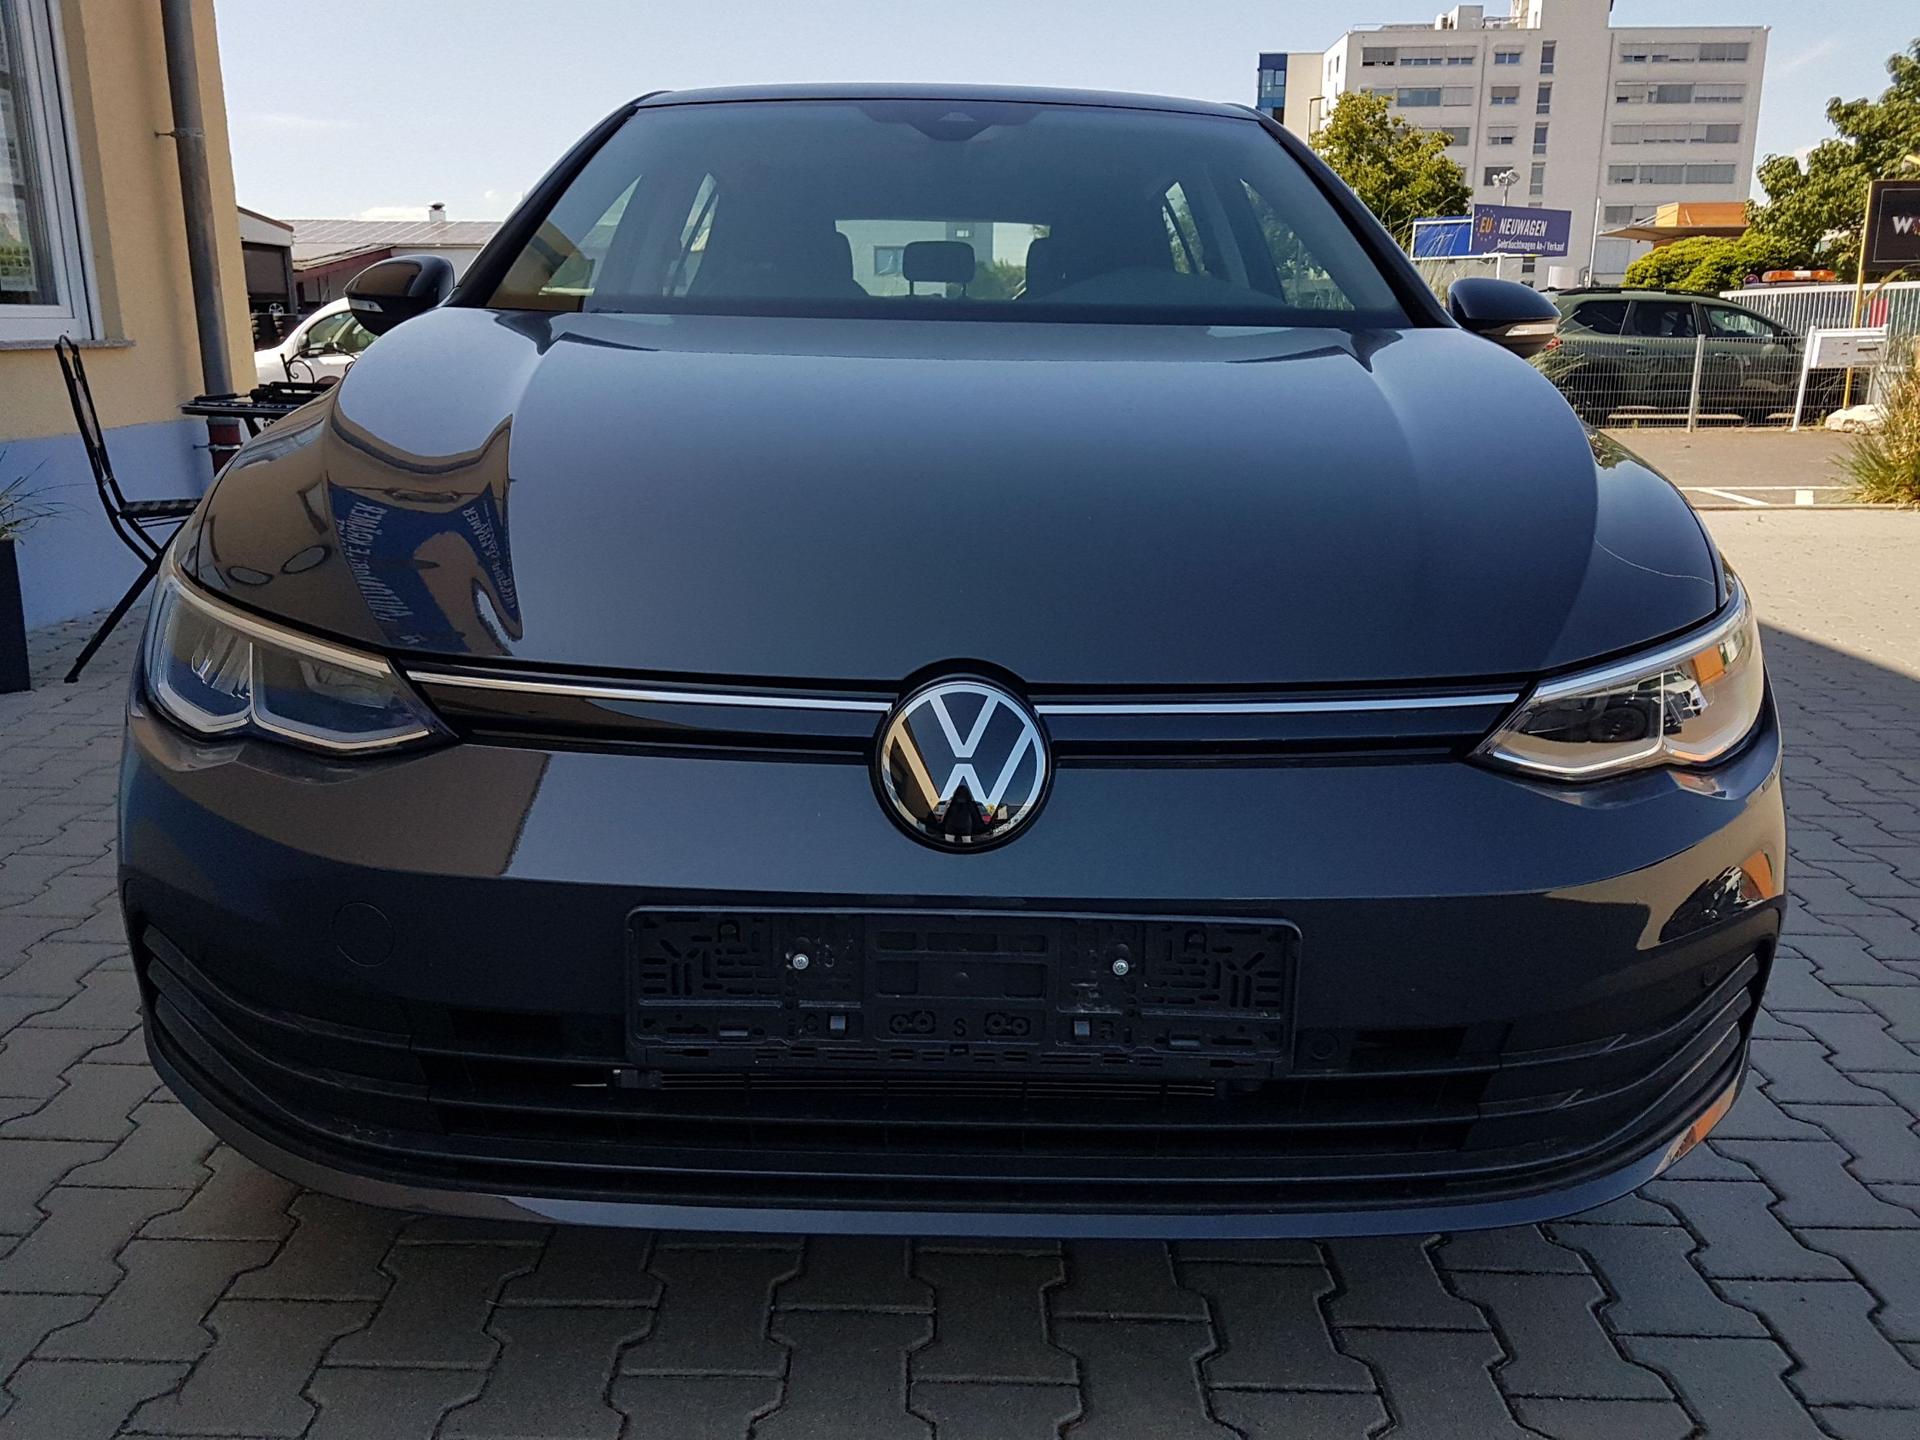 Volkswagen Golf, Autohaus Kleinfeld, EU Fahrzeuge